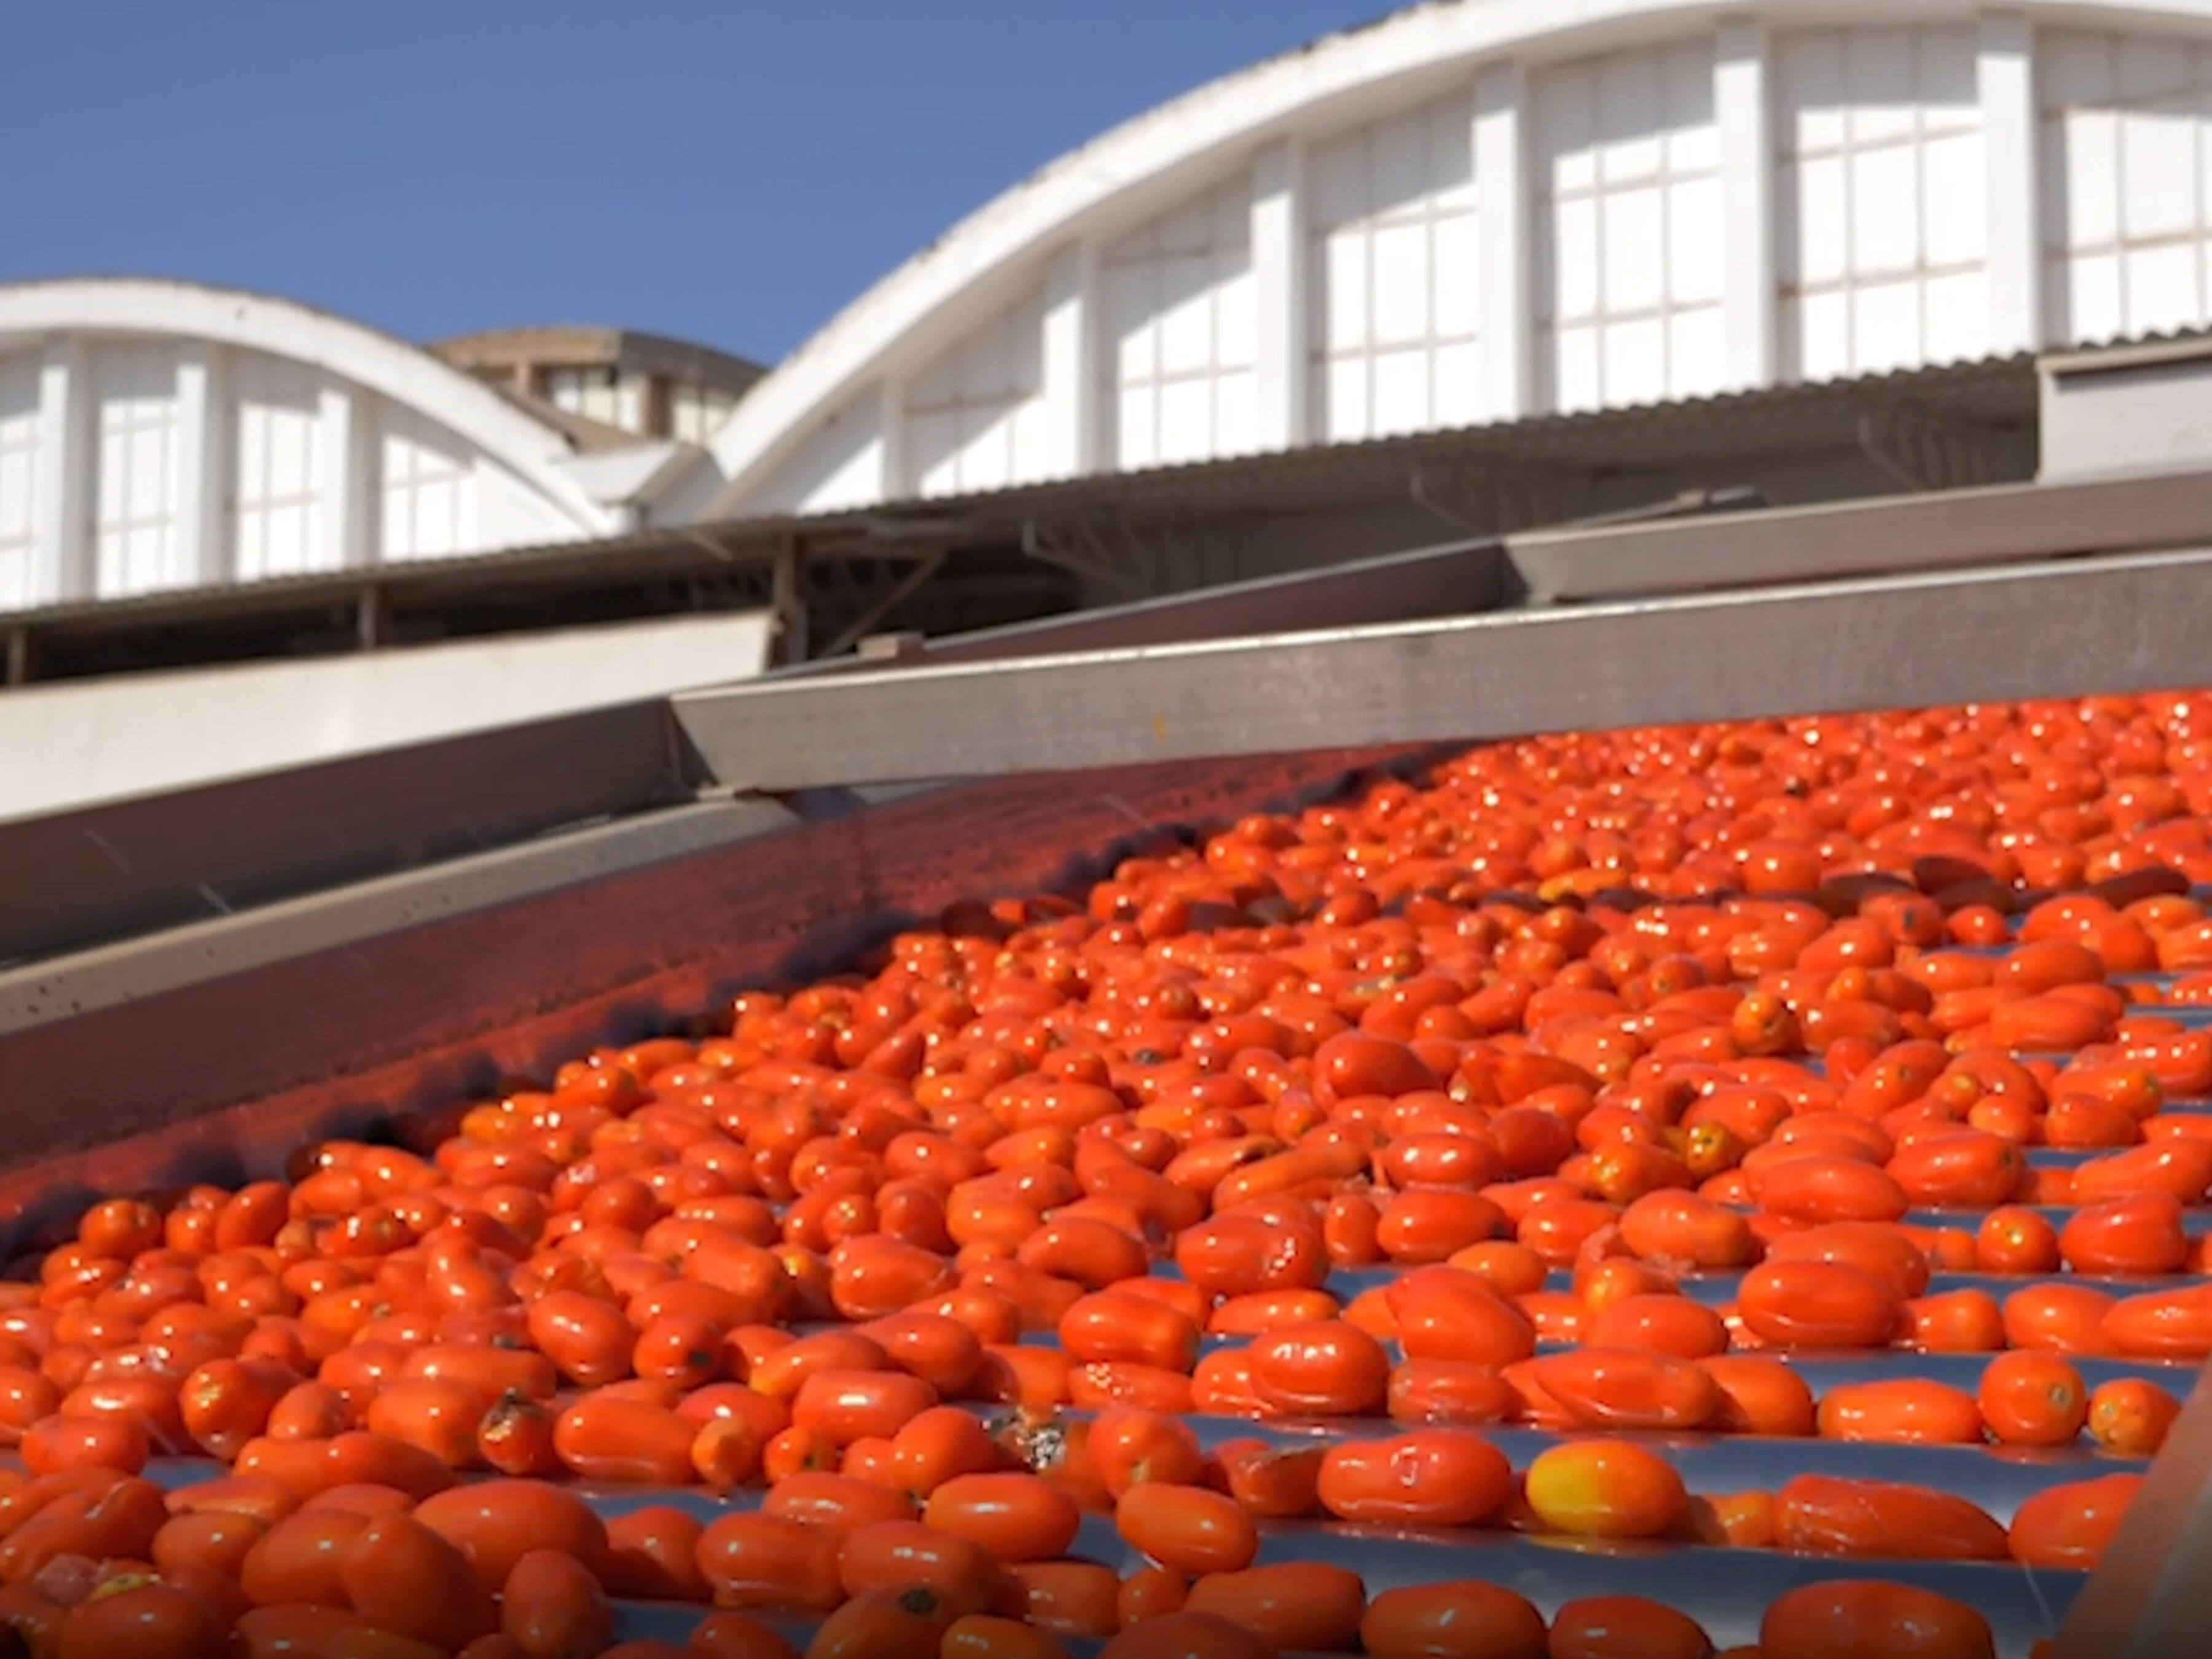 Casar tomato factory in Sardinia, Italy